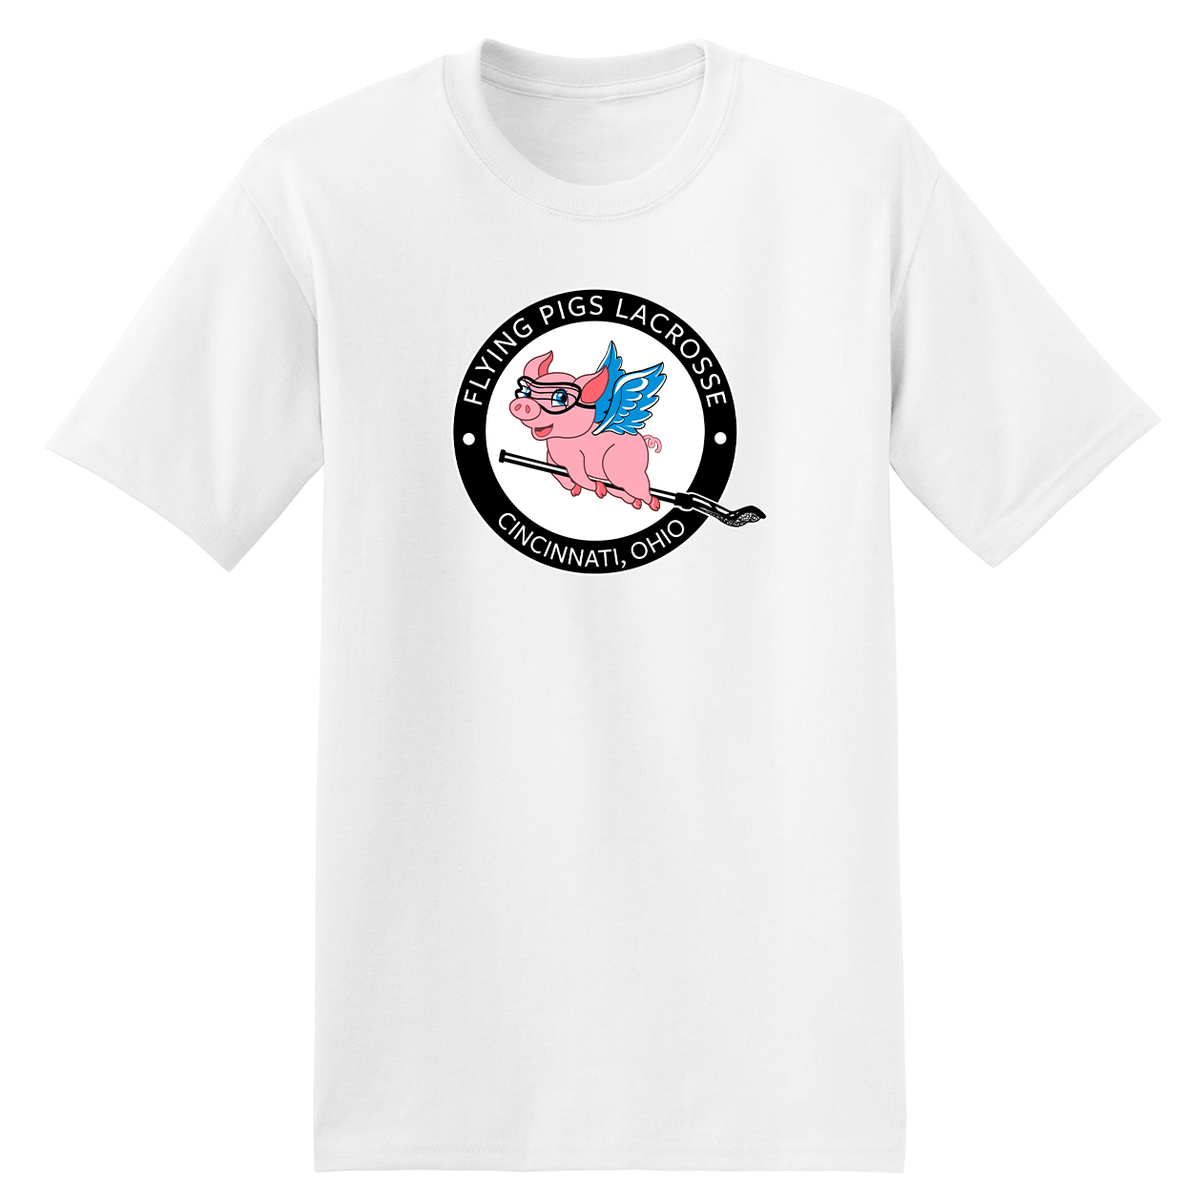 Flying Pigs Lacrosse T-Shirt